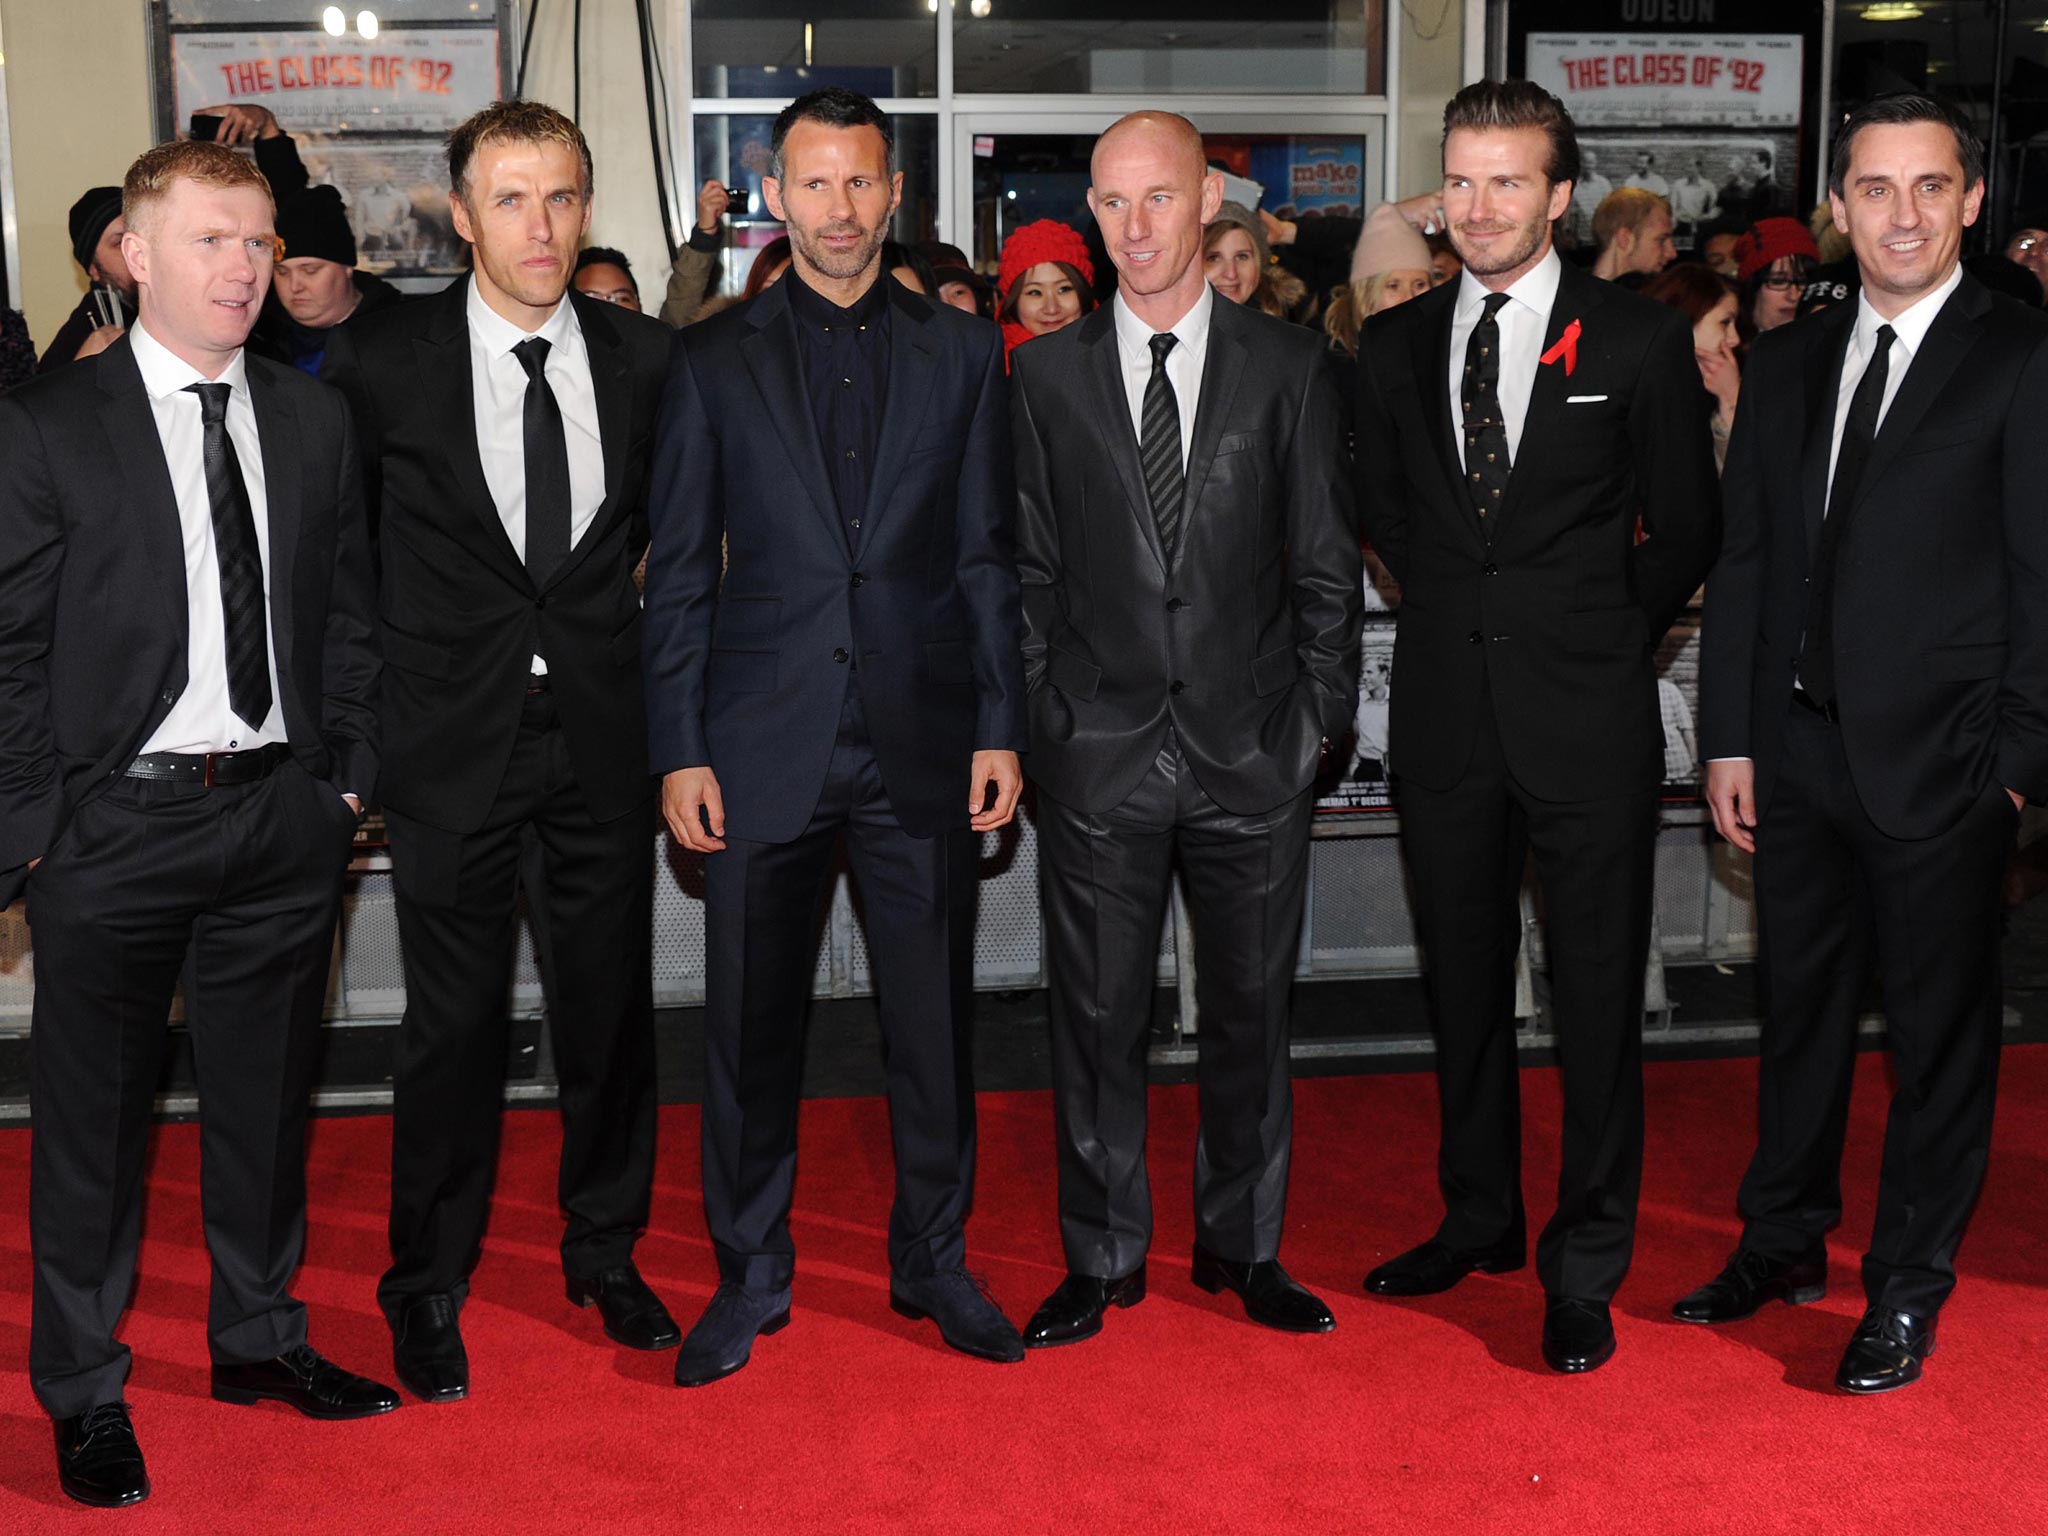 (L-R) Paul Scholes, Phil Neville, Ryan Giggs, Nicky Butt, David Beckham and Gary Neville